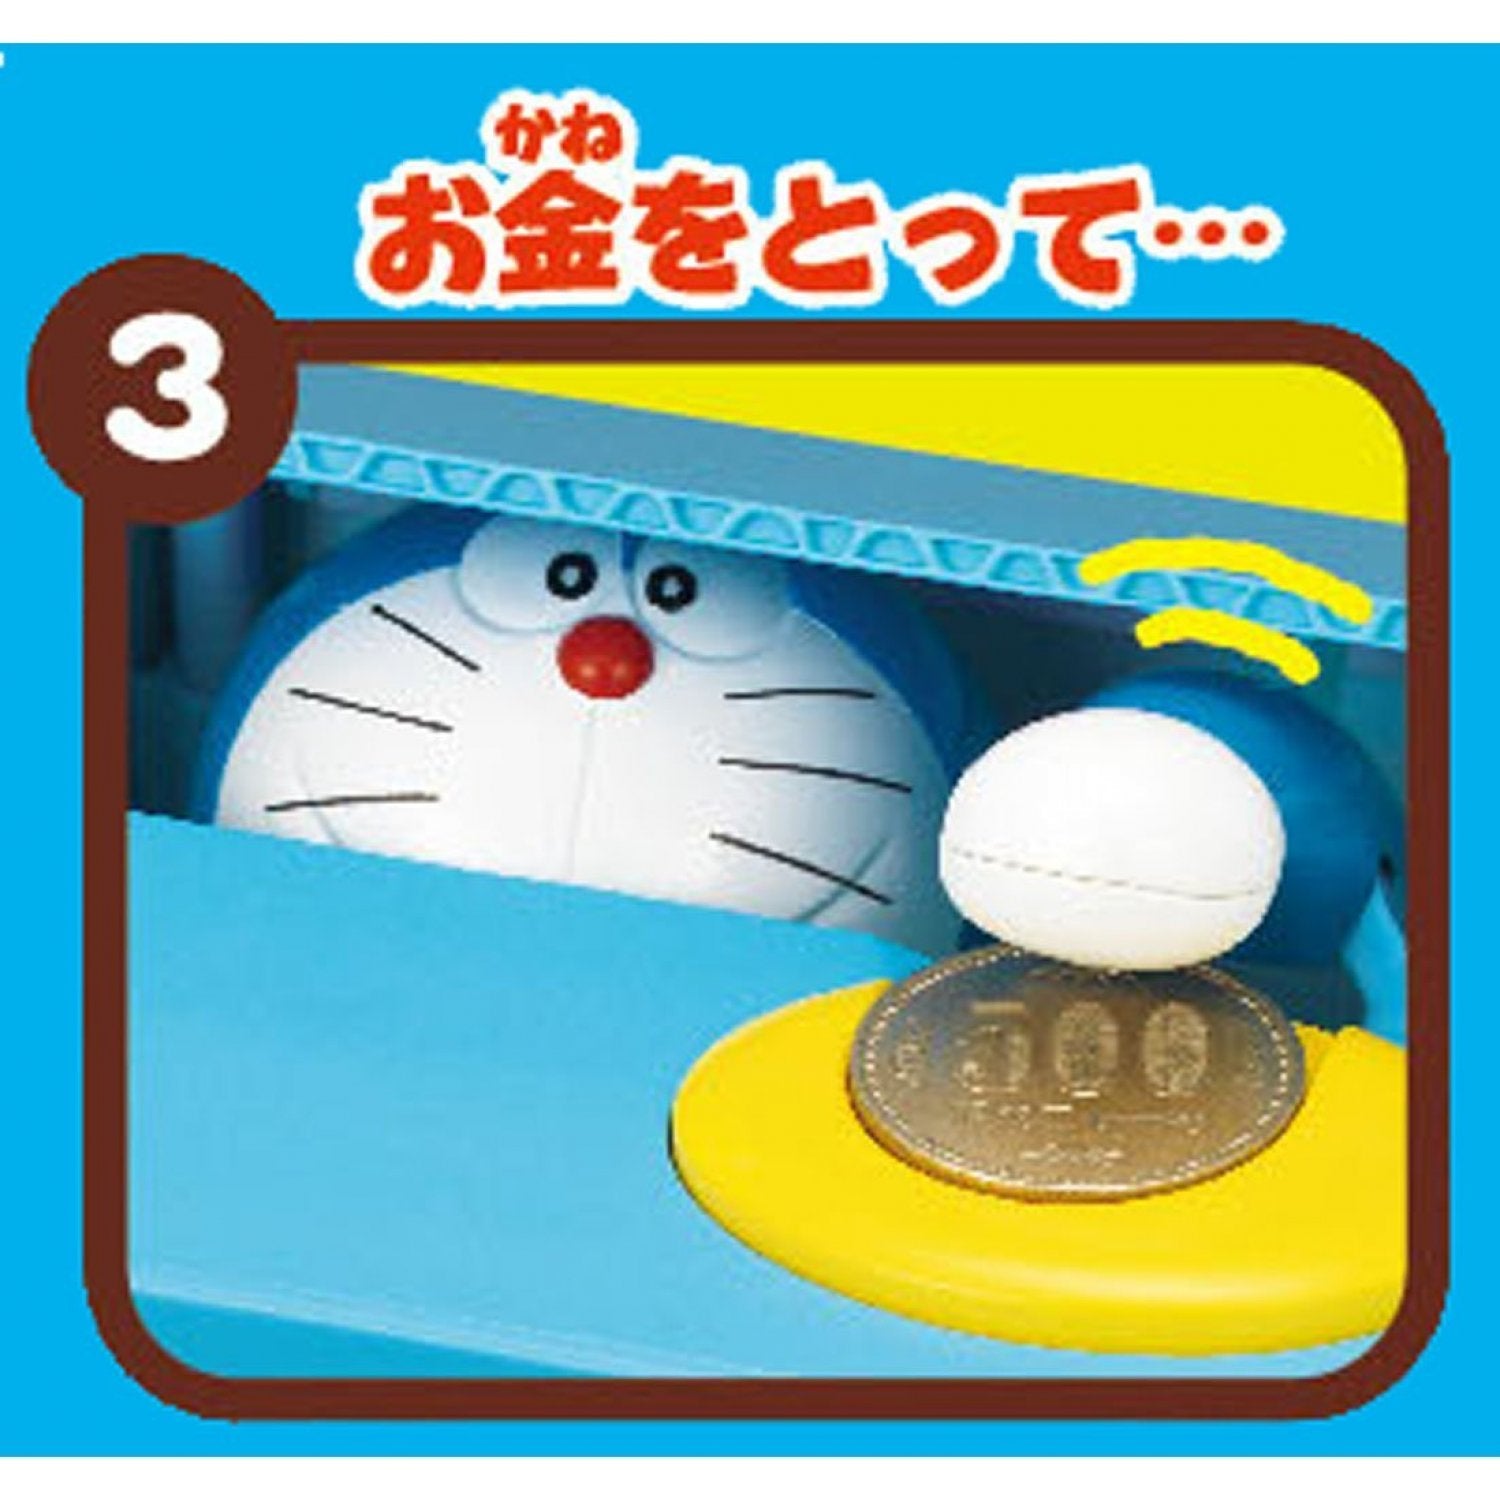 Shine - Doraemon Coin Bank - Marvelous Toys